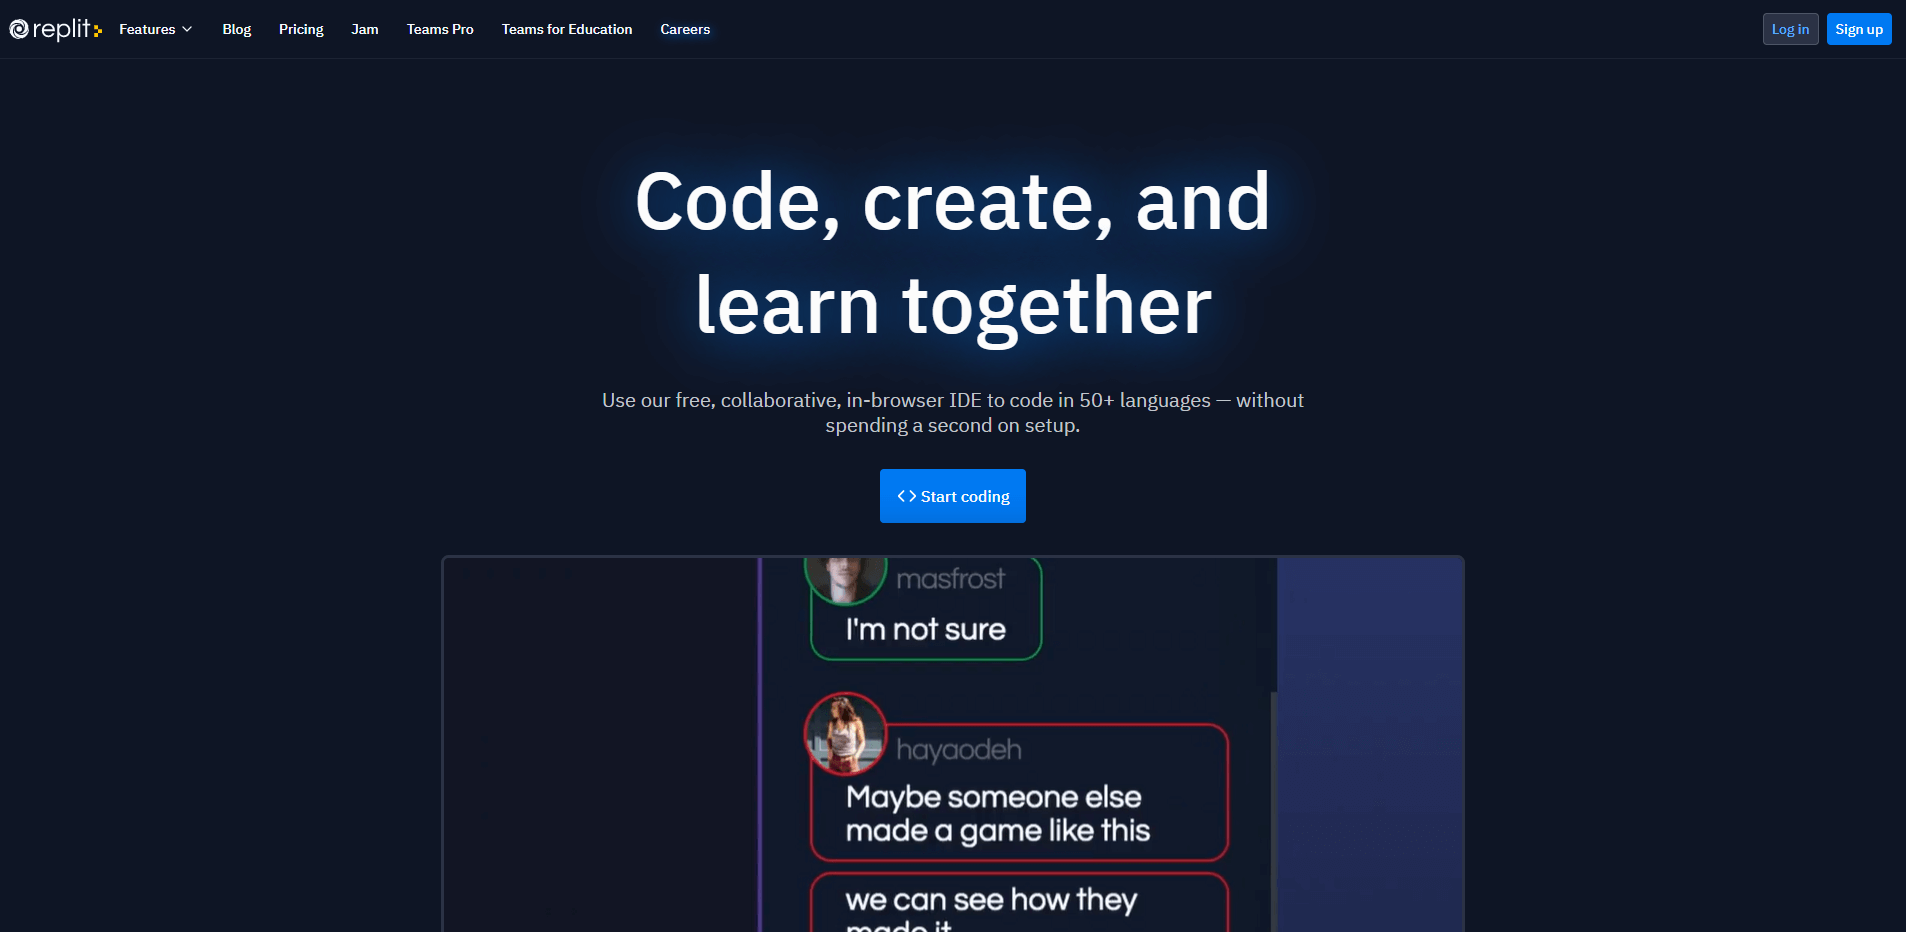 Replit code collaboration tool screenshot